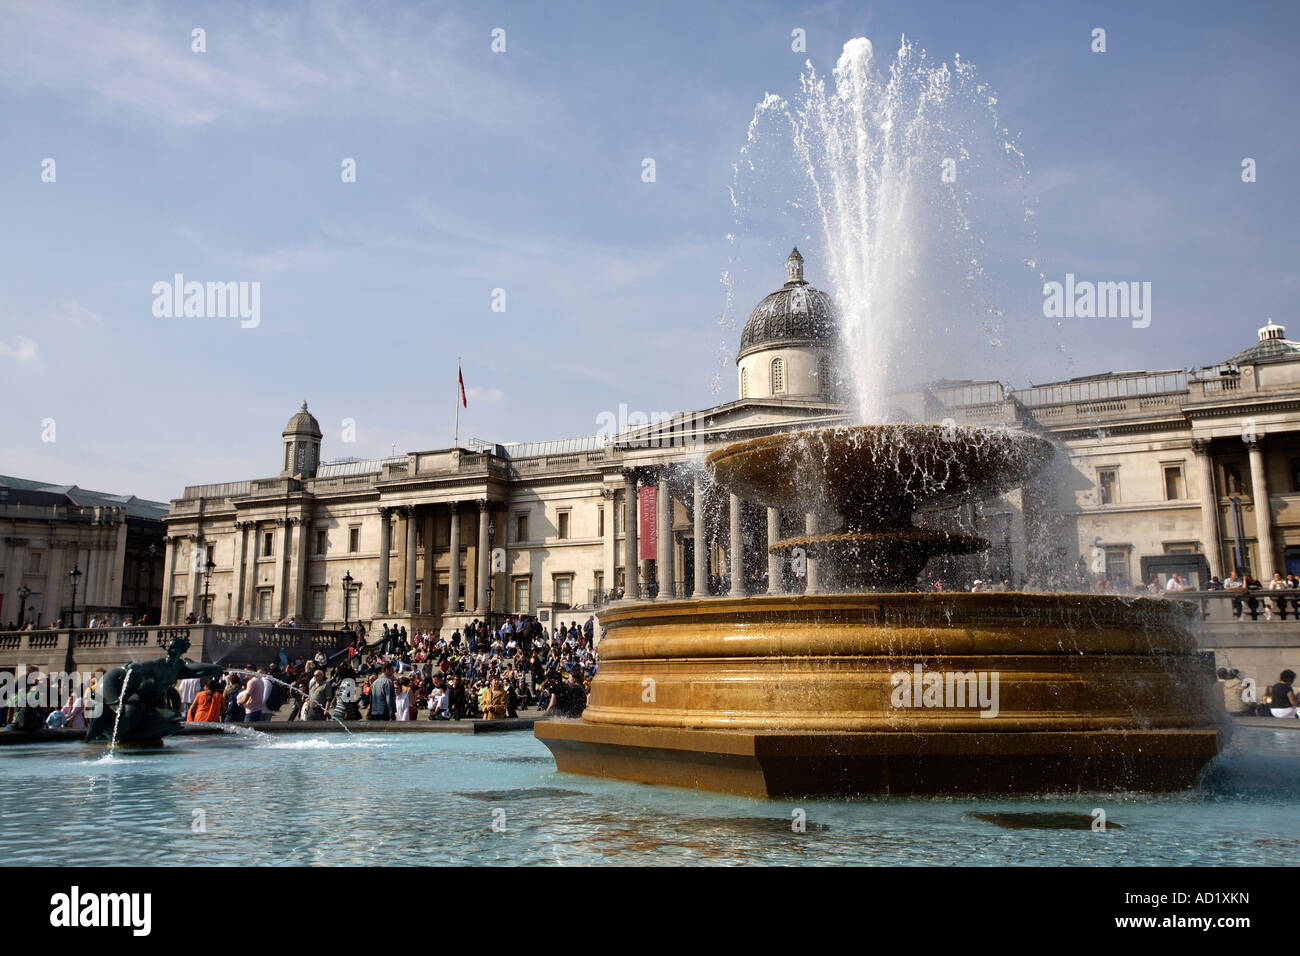 Fontaine et Galerie Nationale. Trafalgar Square, London, England, UK Banque D'Images